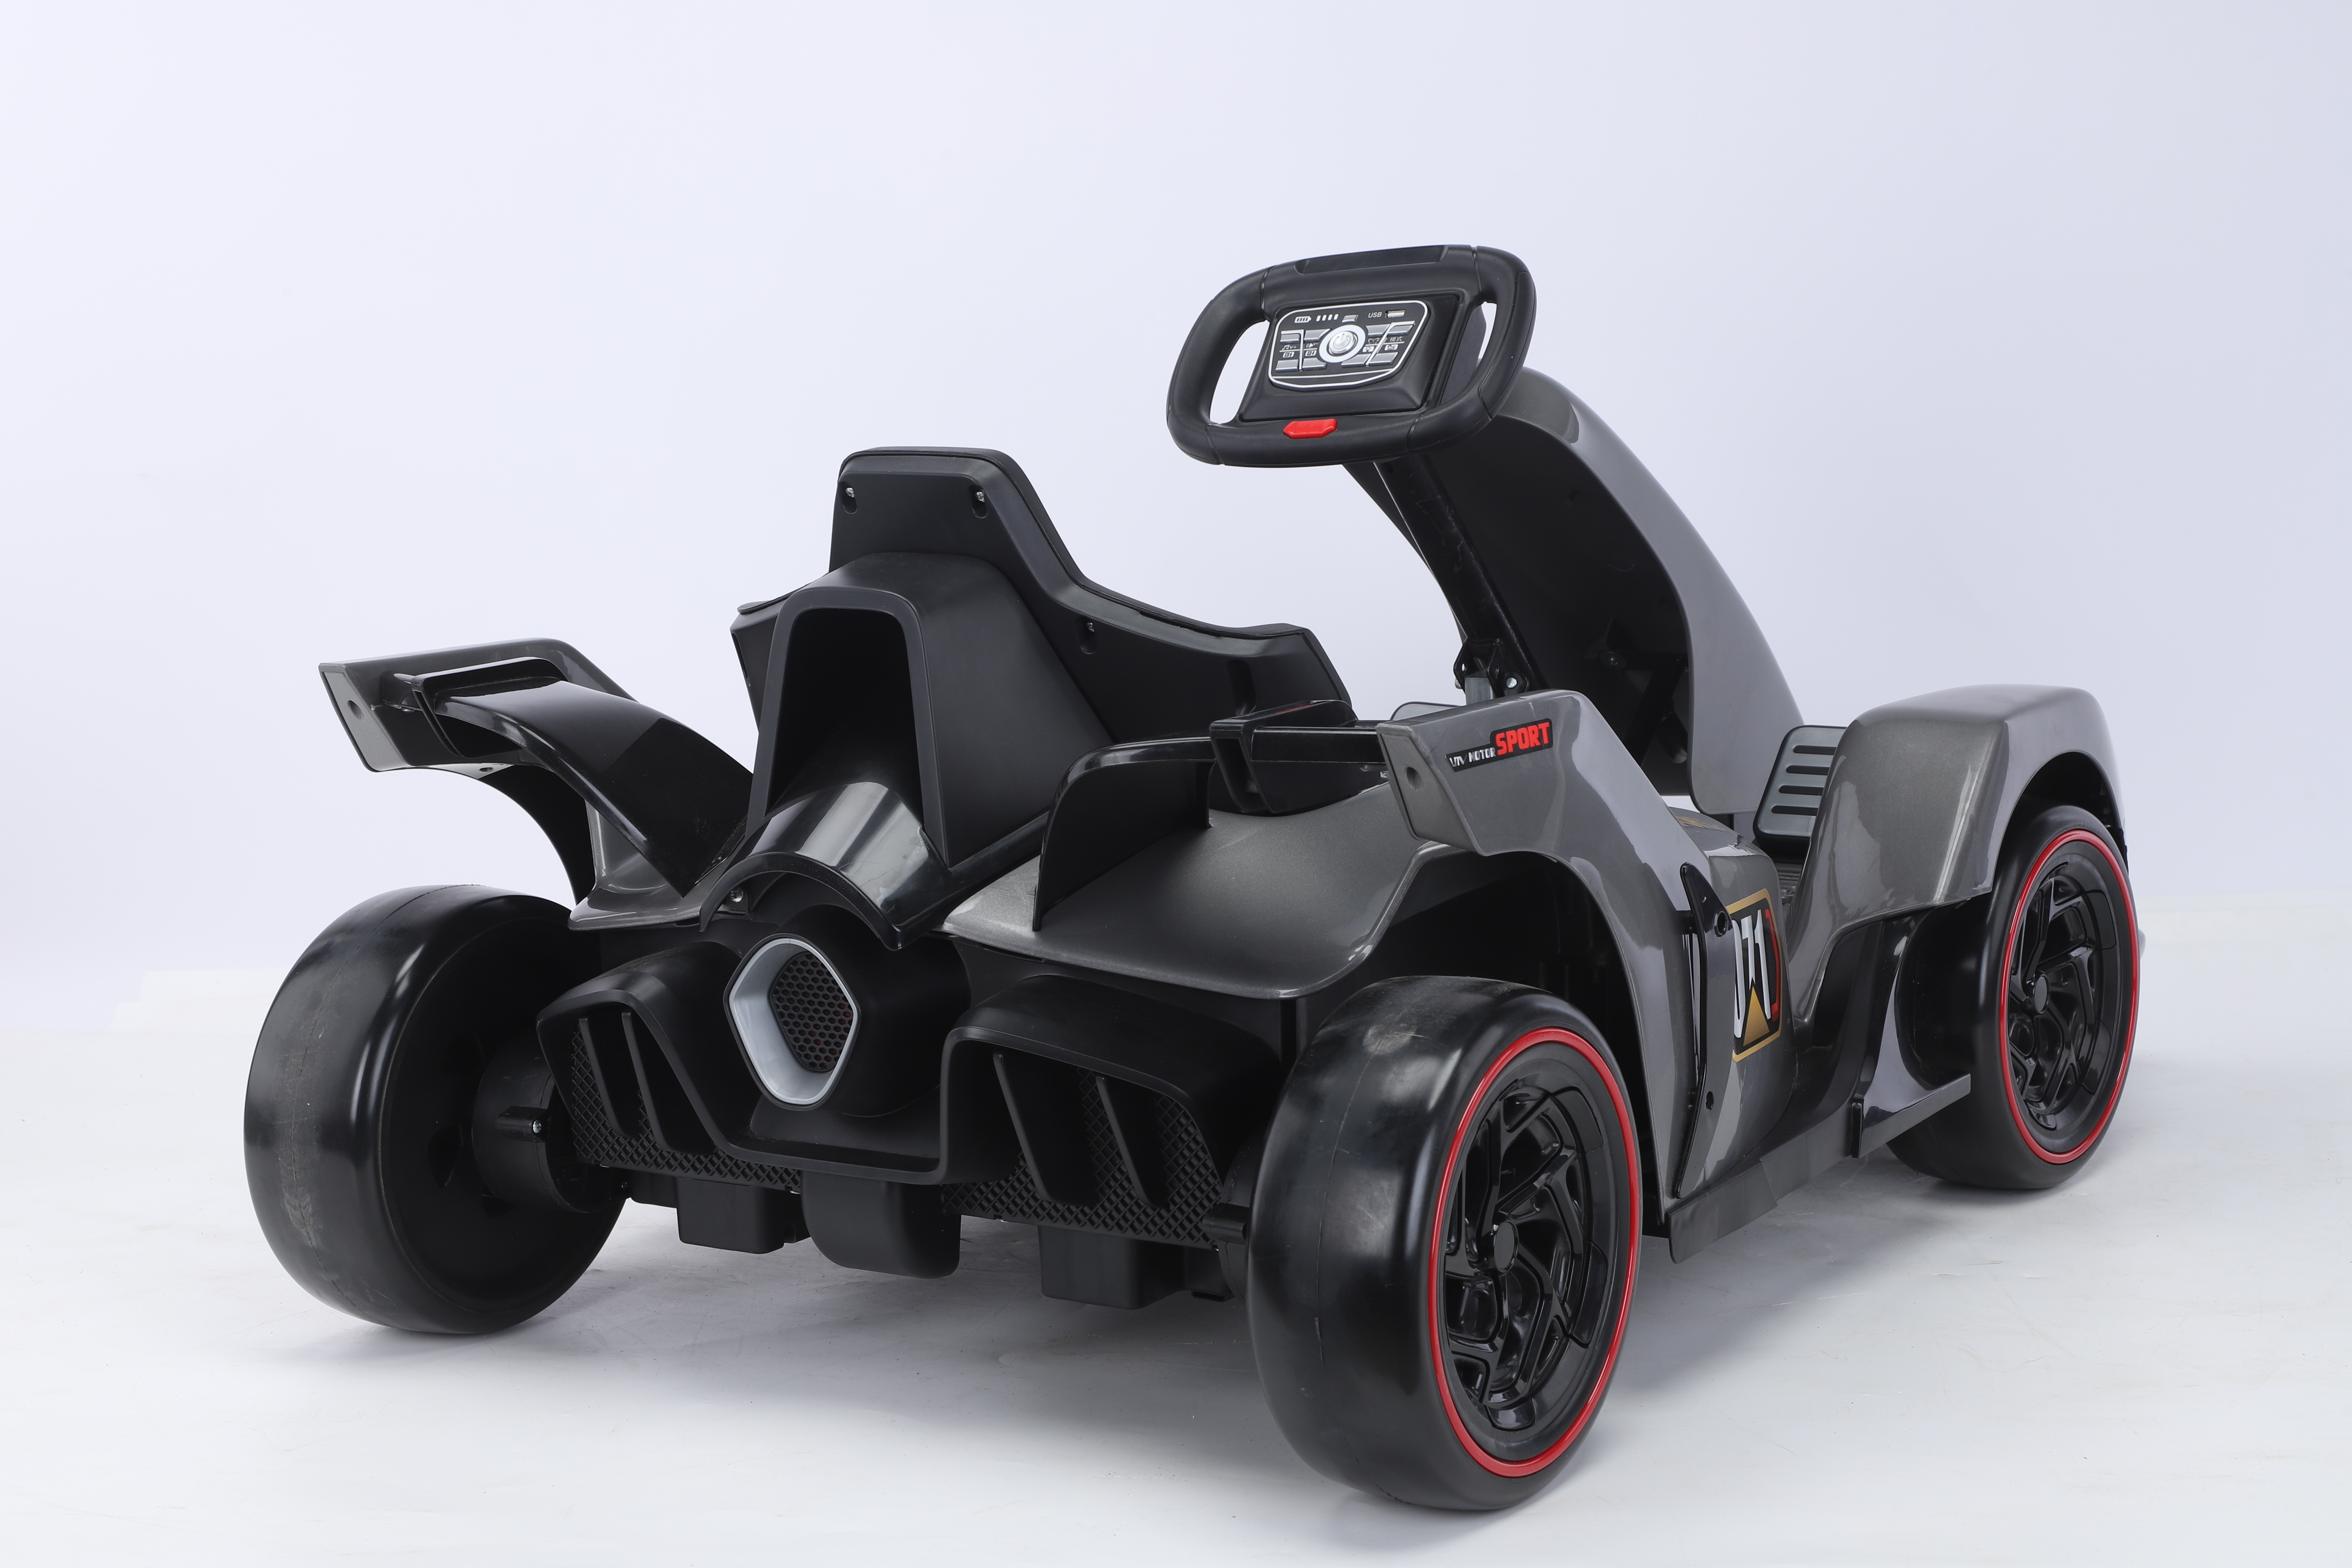 Dalisi DLS-X2 24V go kart powerwheel ride on car for kids